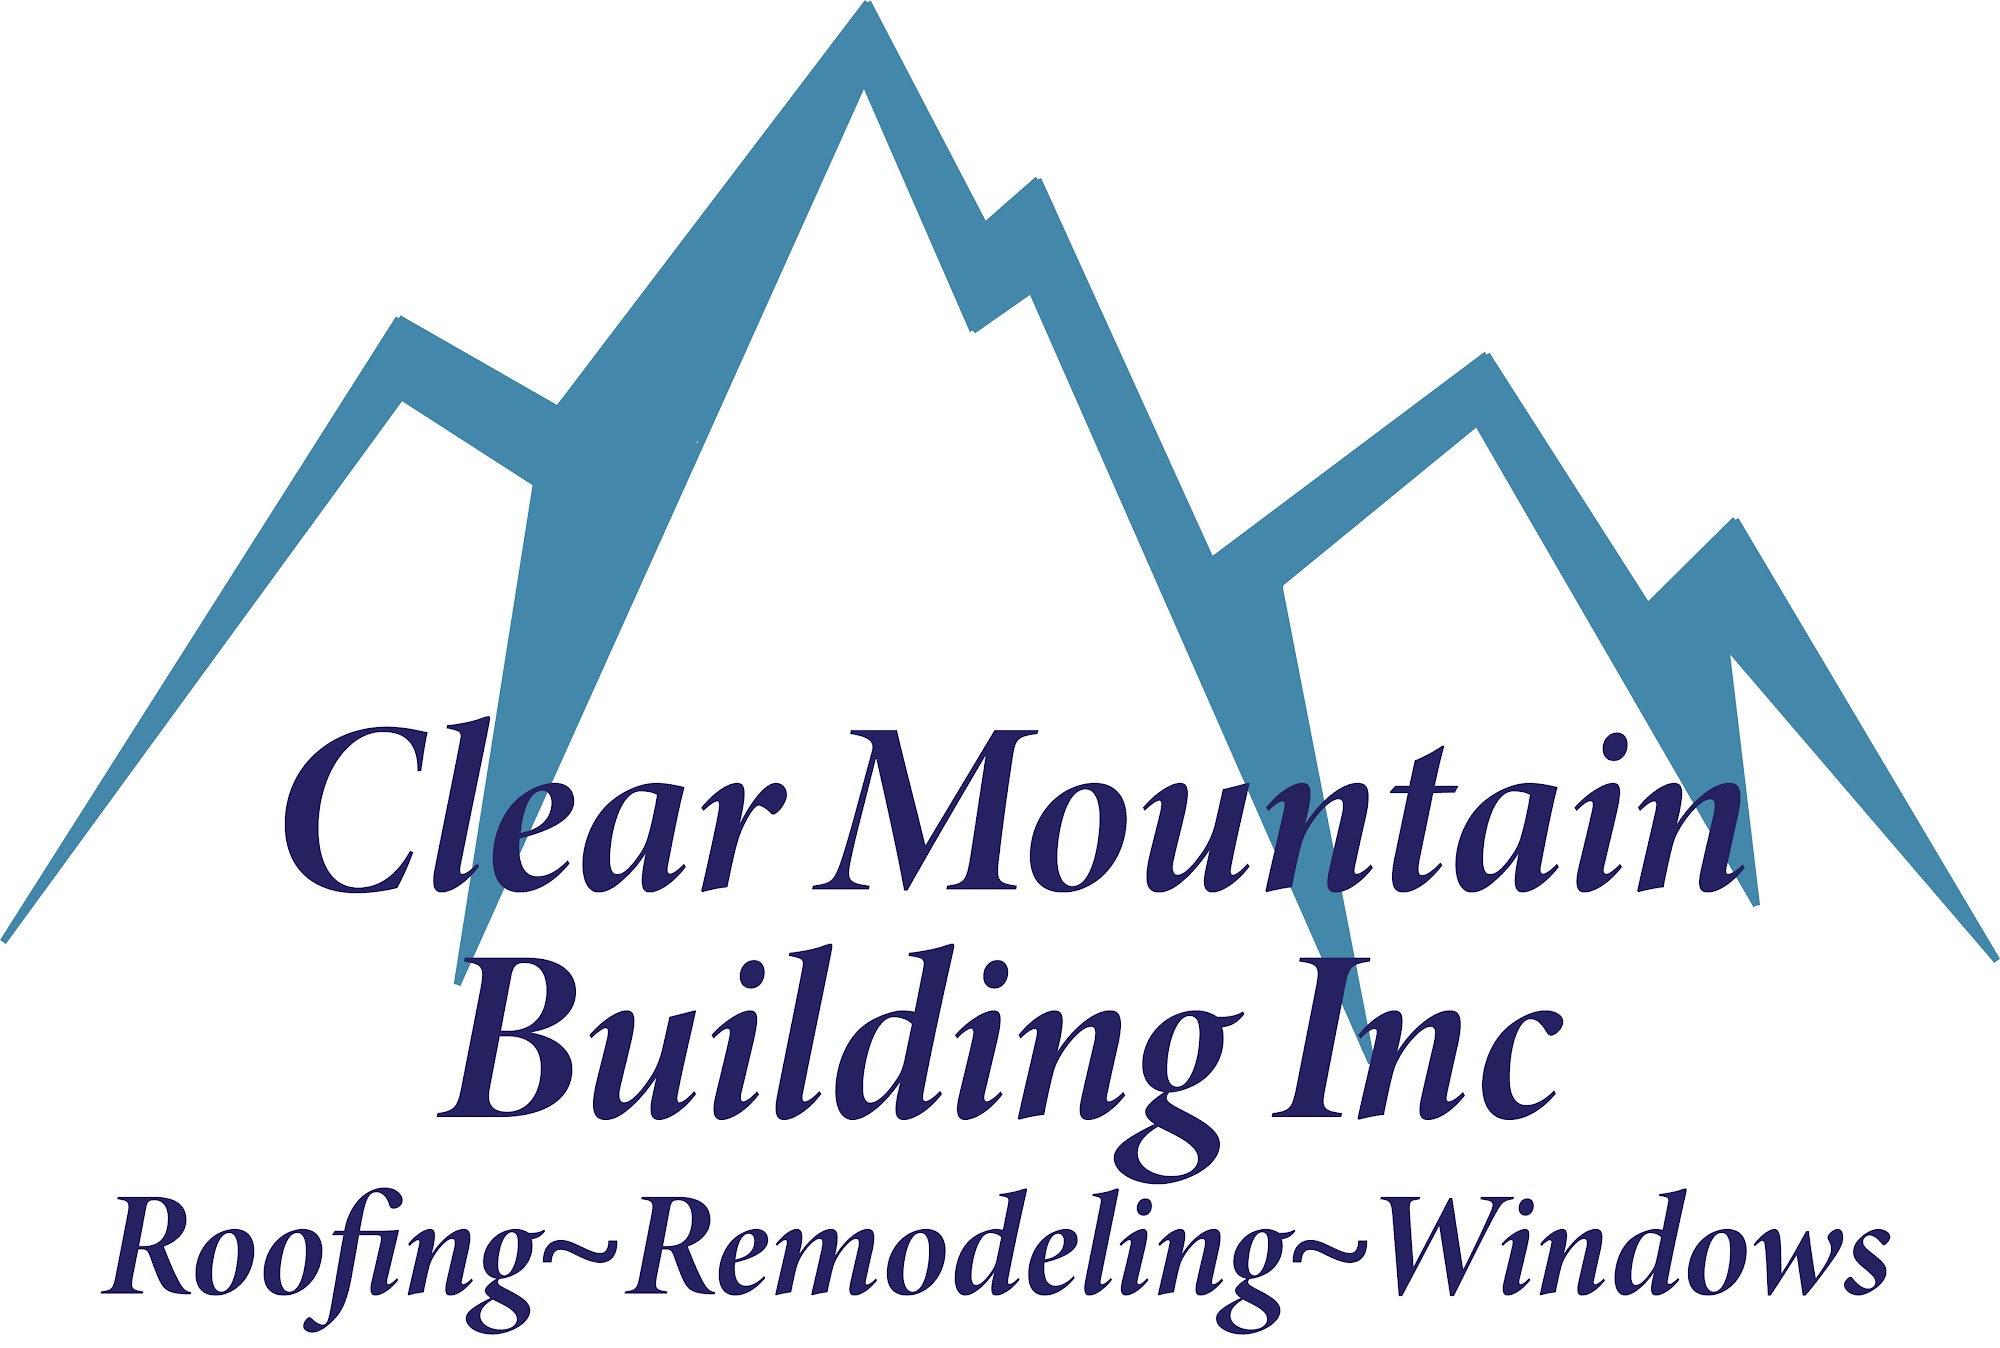 Clear Mountain Building Inc. 112 N High St, Mt Orab Ohio 45154